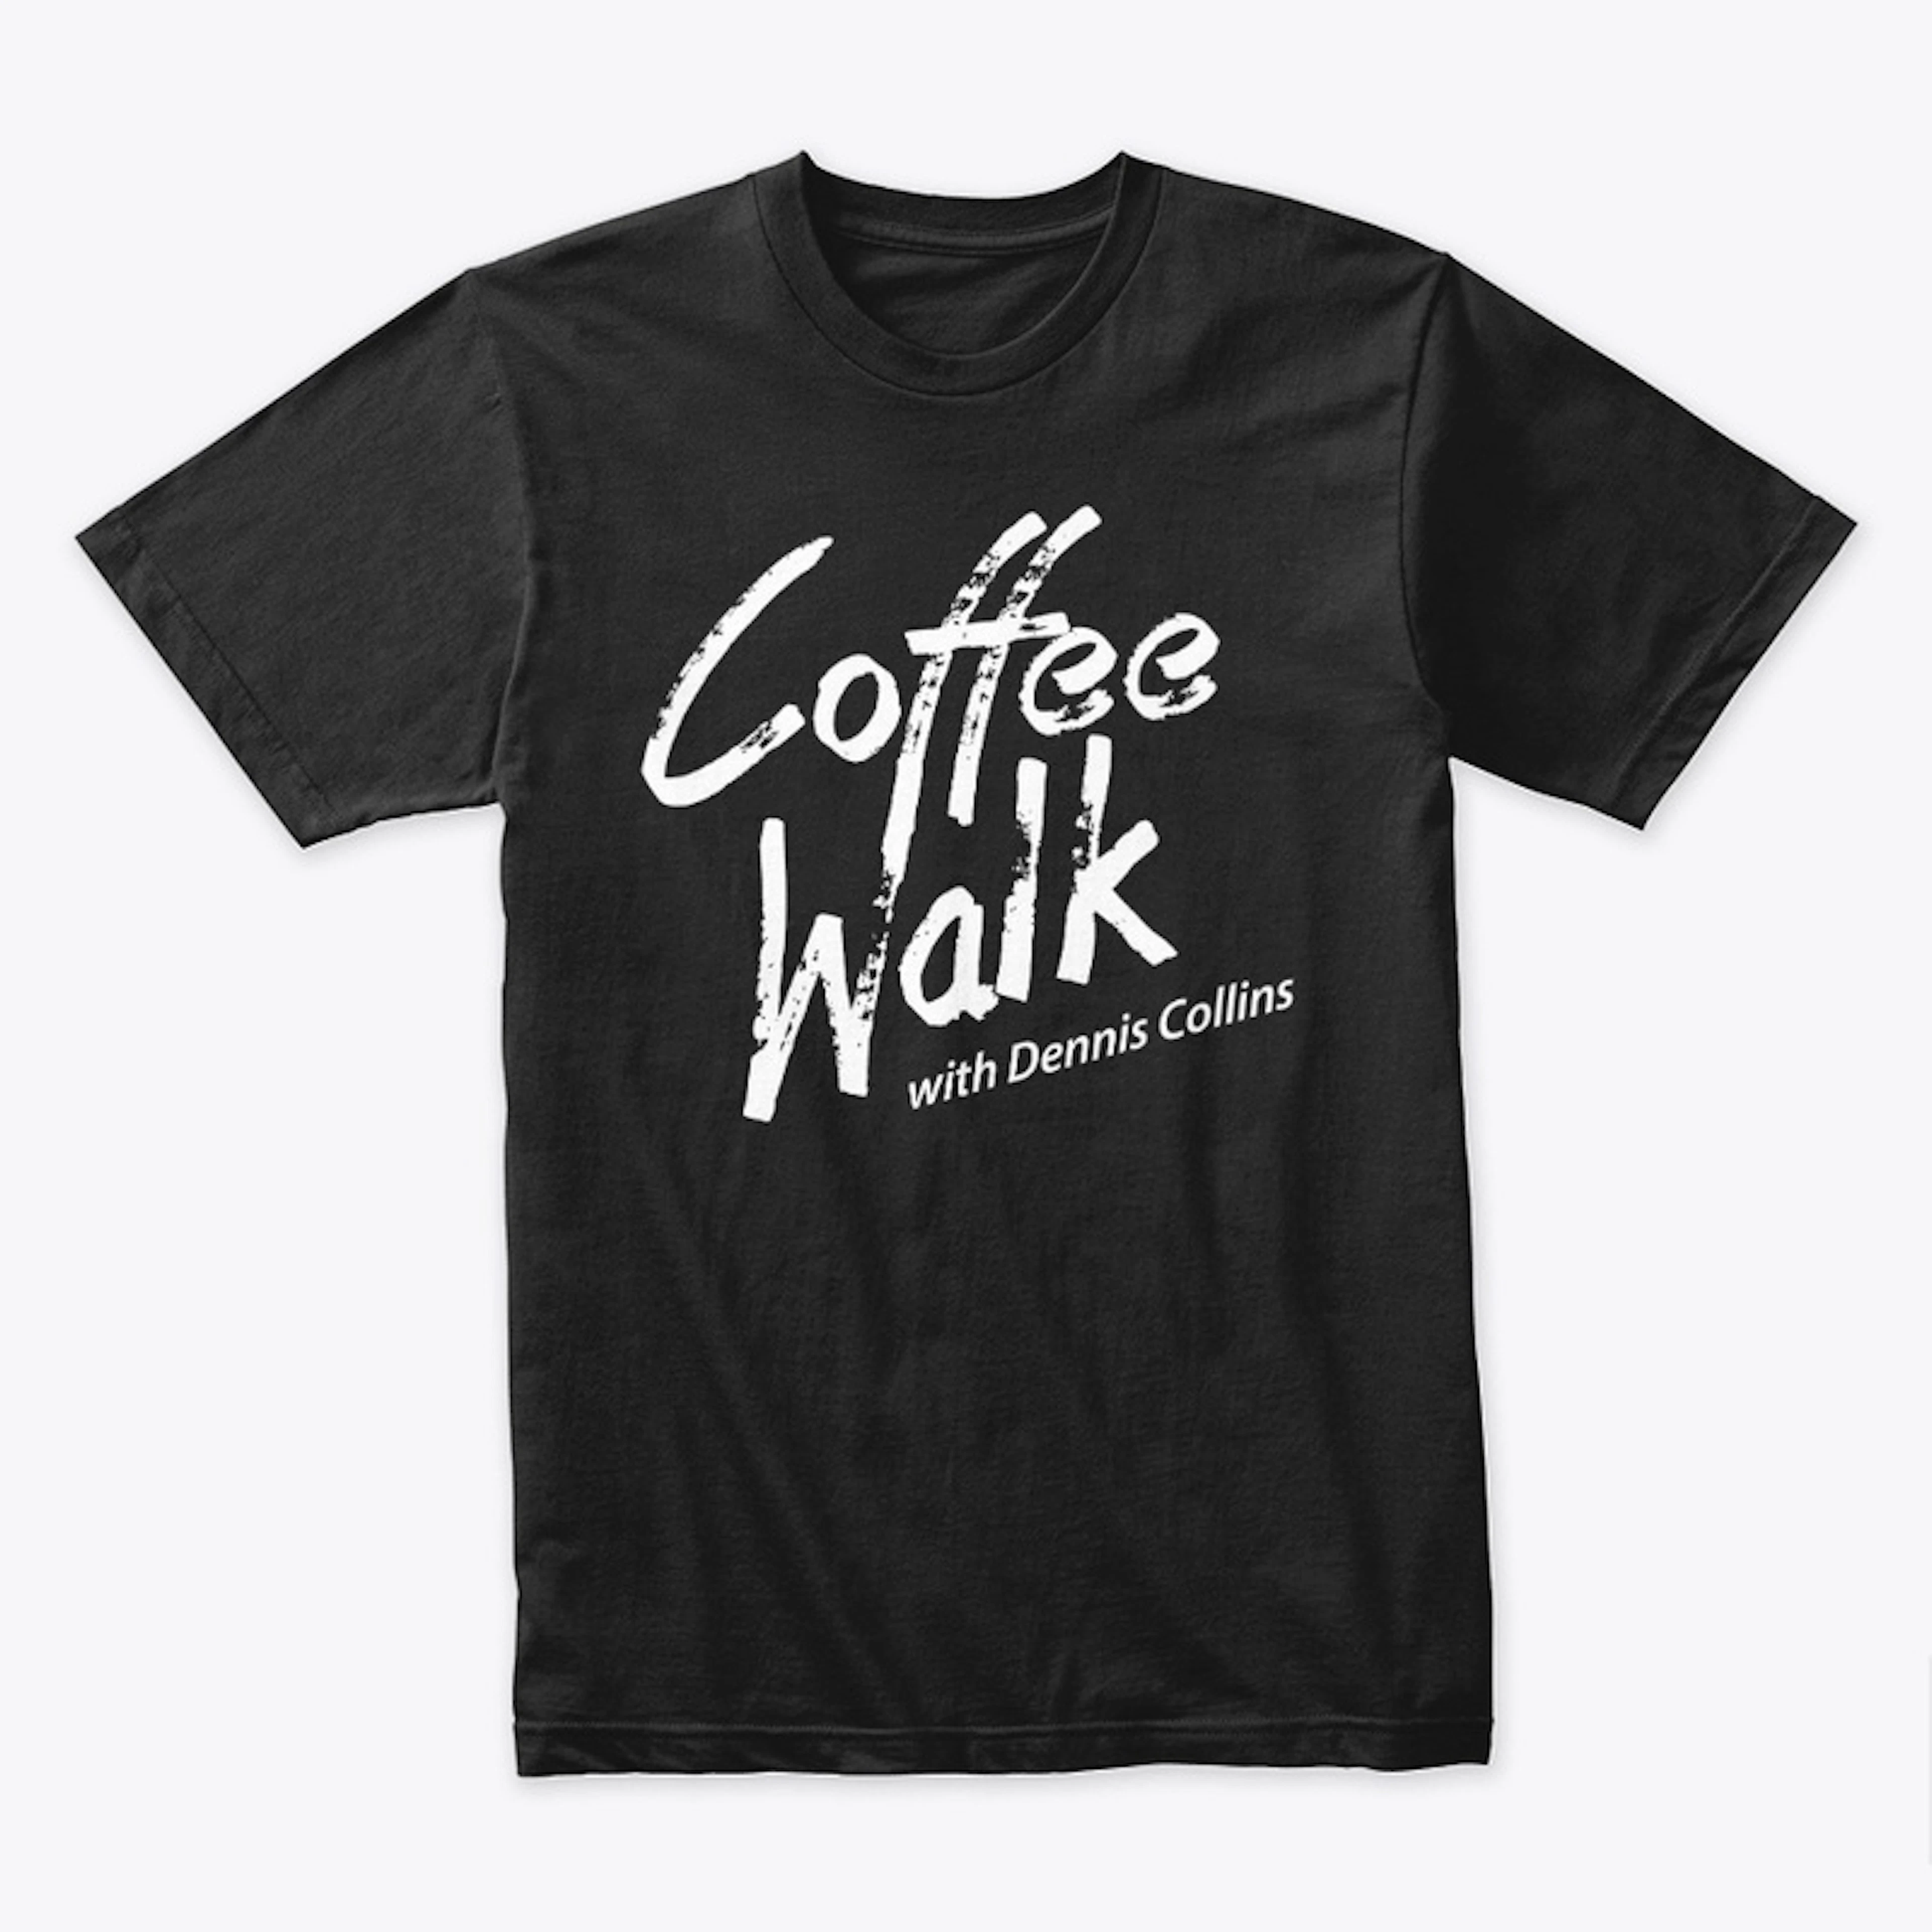 CLASSIC COFFEE WALK SHIRTS